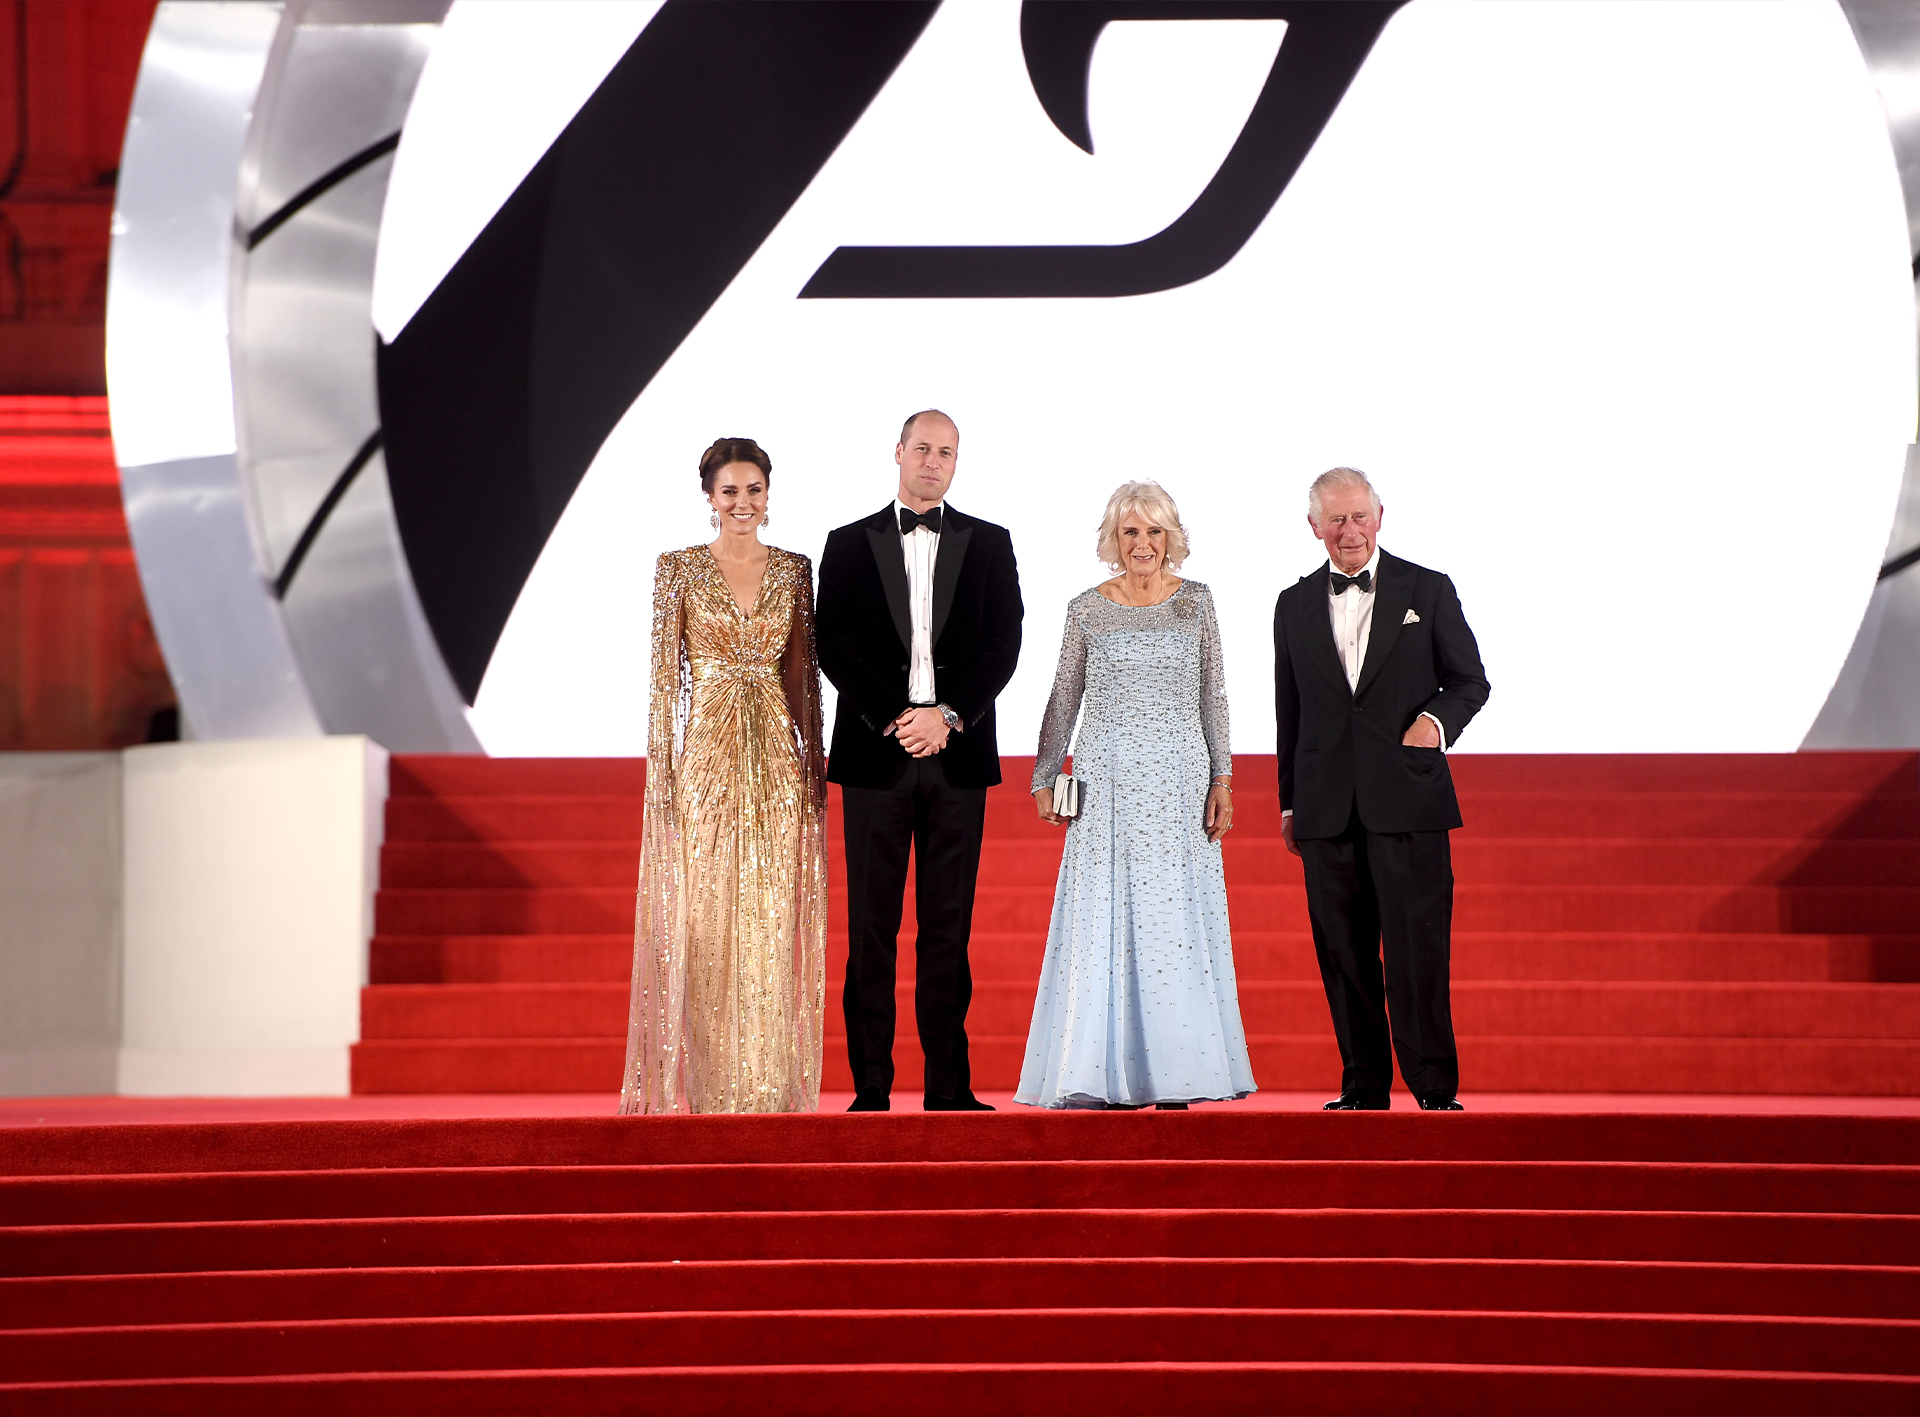 Royal Family, źródło 007.com